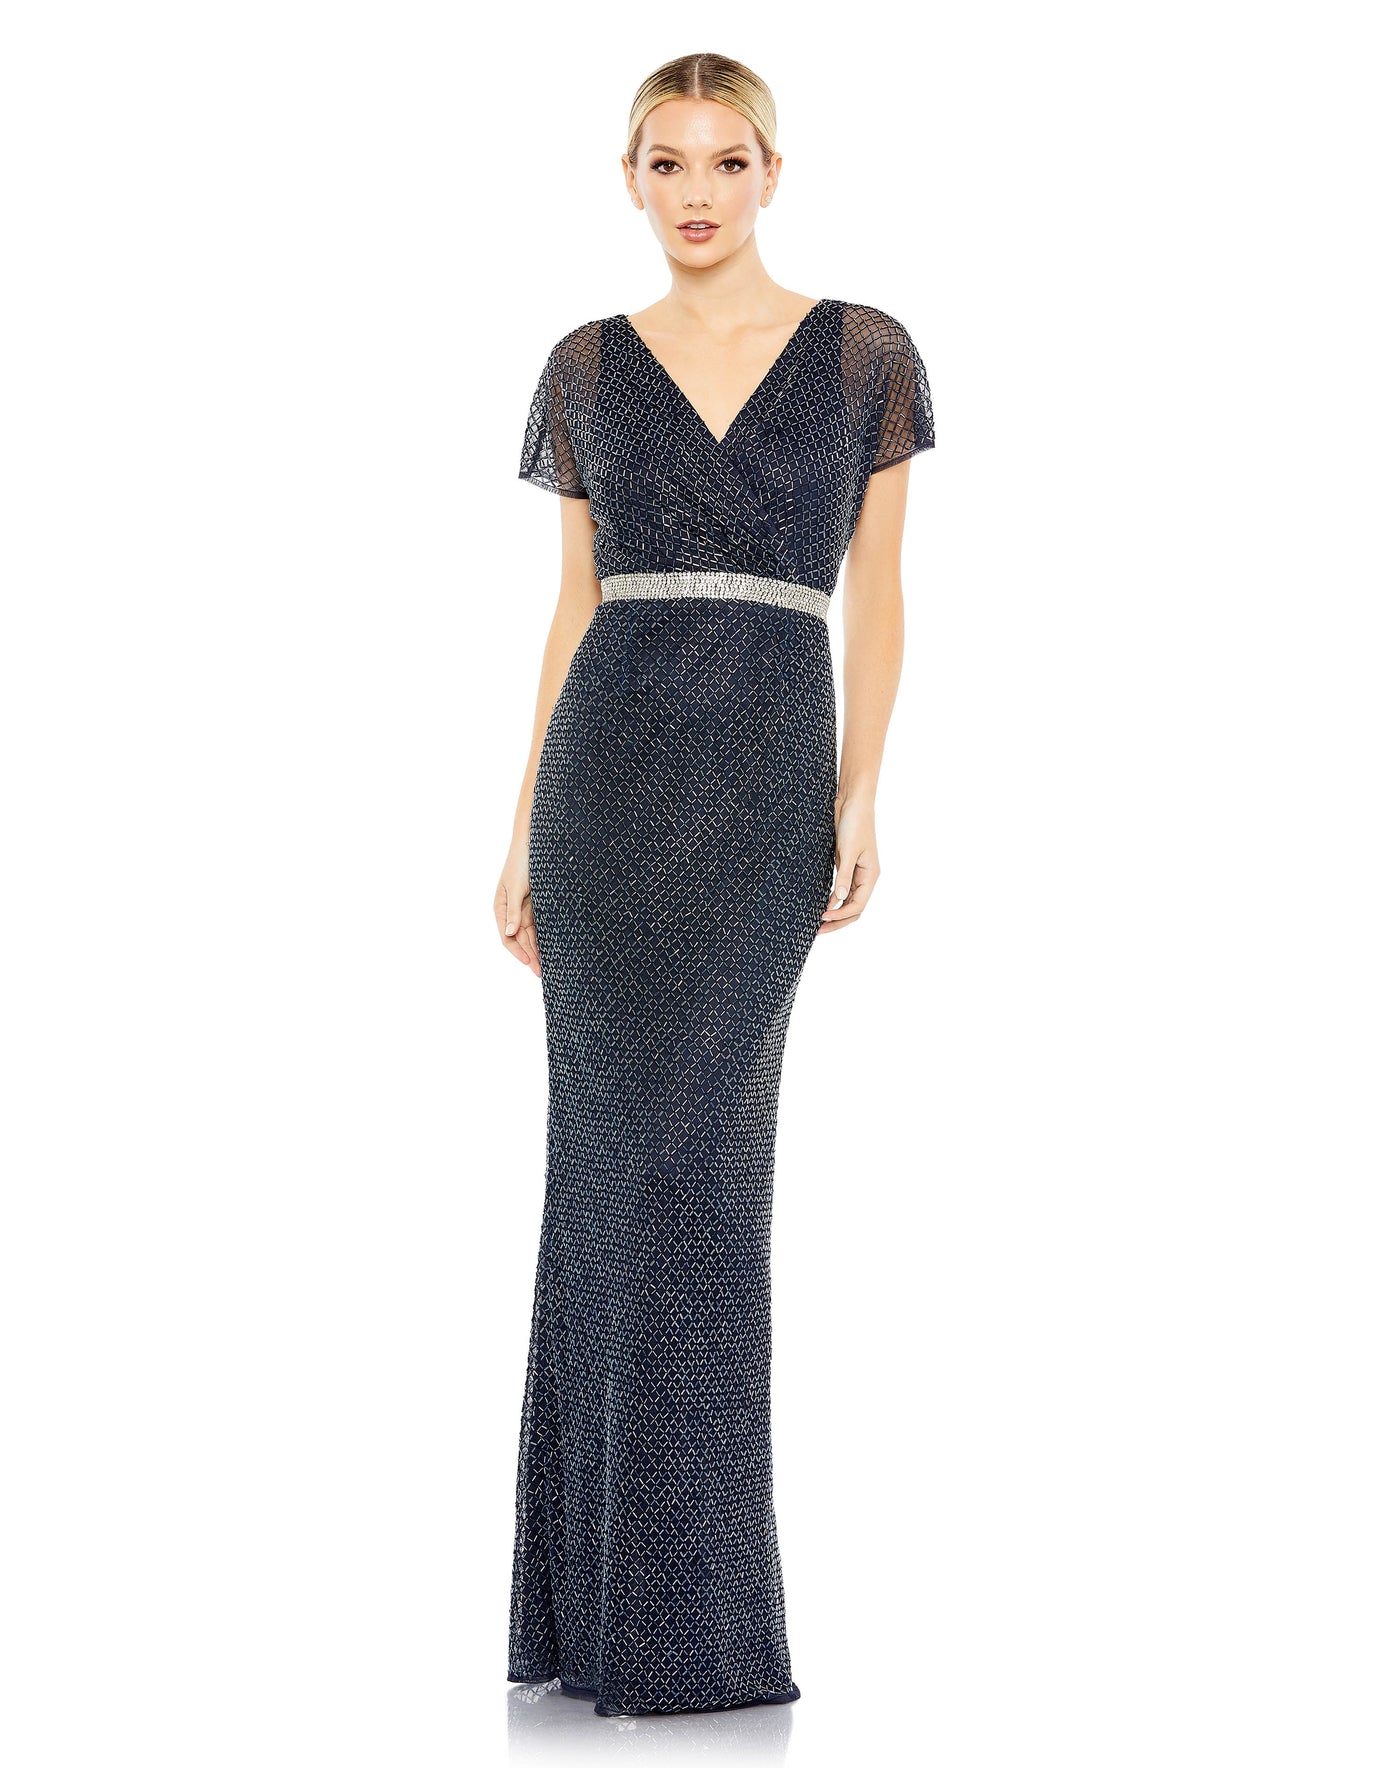 Mac Duggal 93678 B Chic Fashions Long Dress Evening Gowns